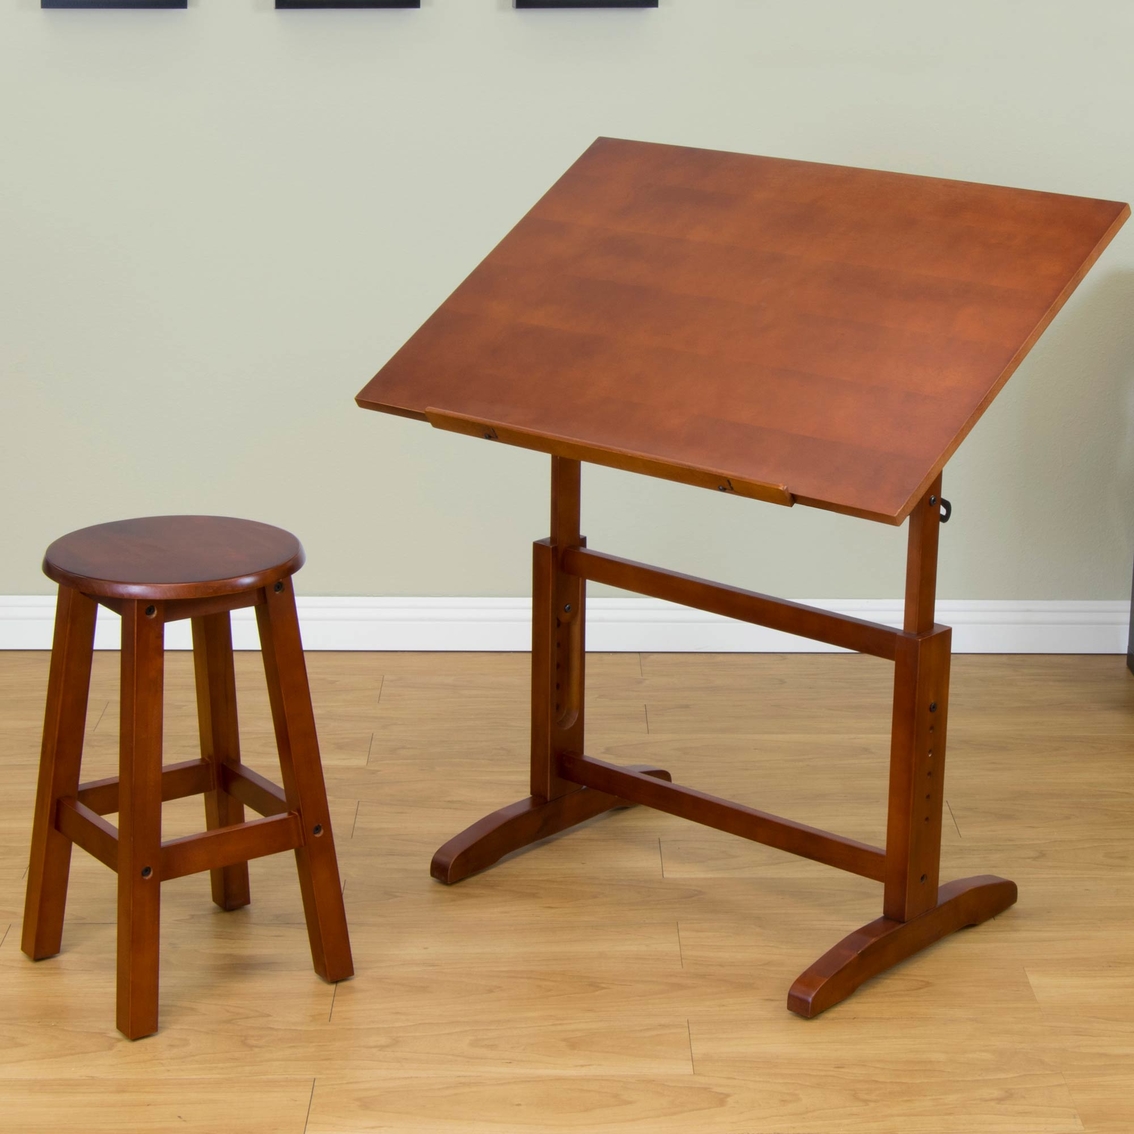 Studio Designs Wood Creative Table and Stool Set - Image 4 of 4